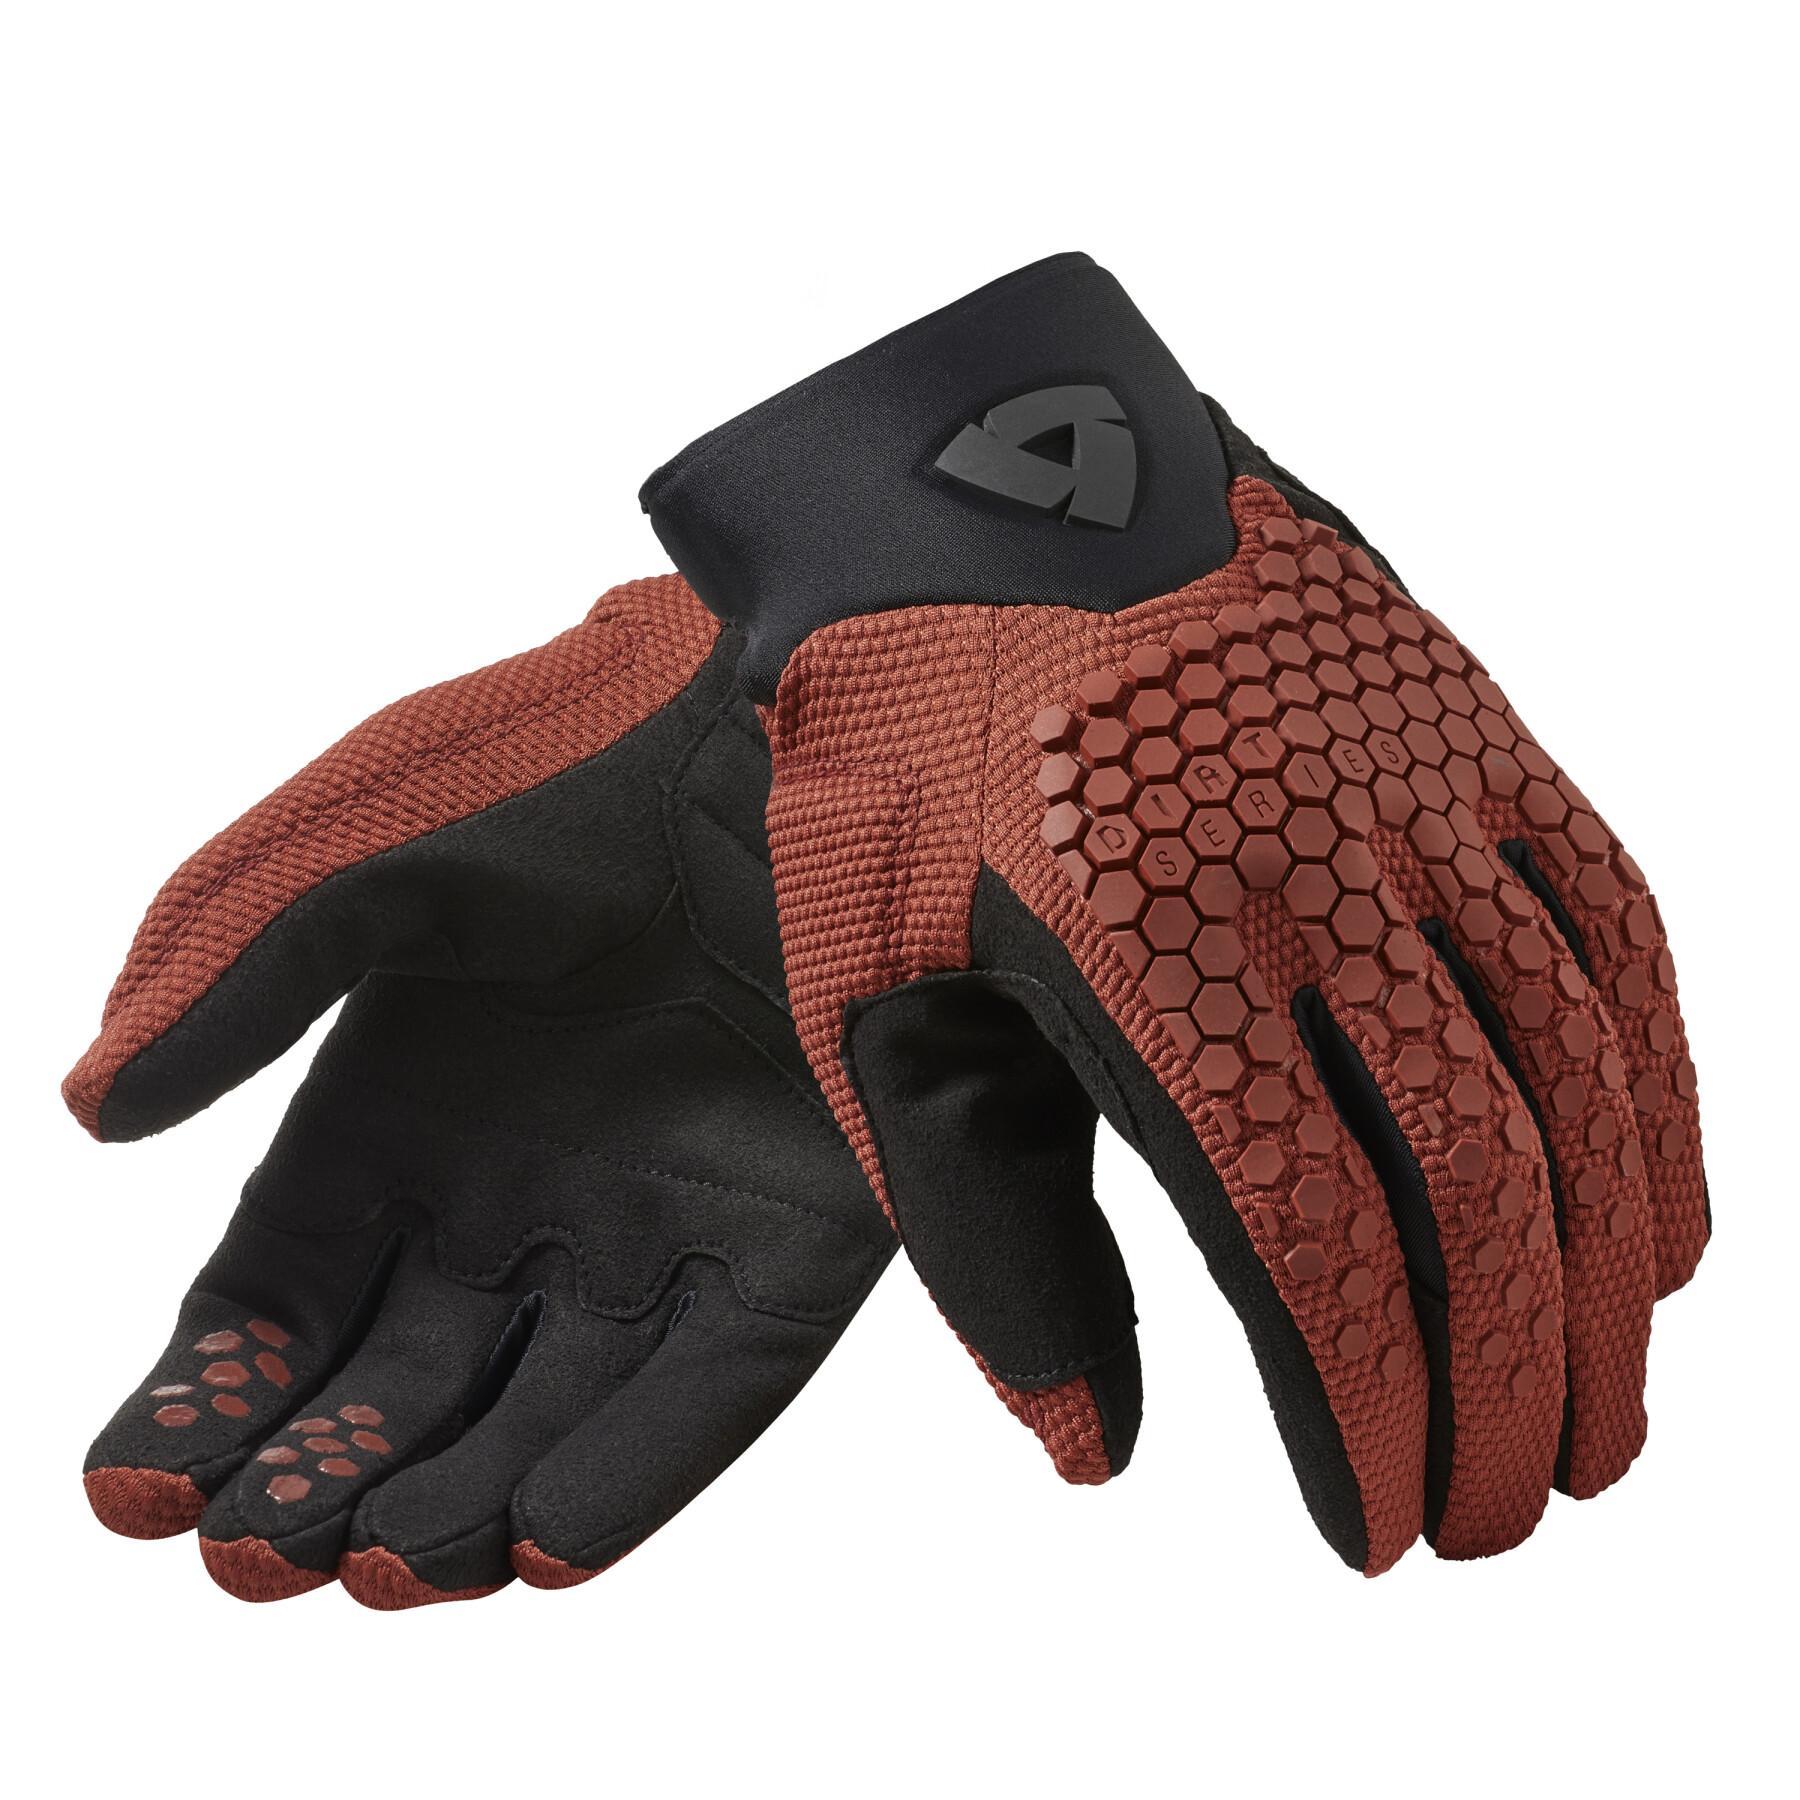 Solid mid-season motorcycle gloves Rev'it